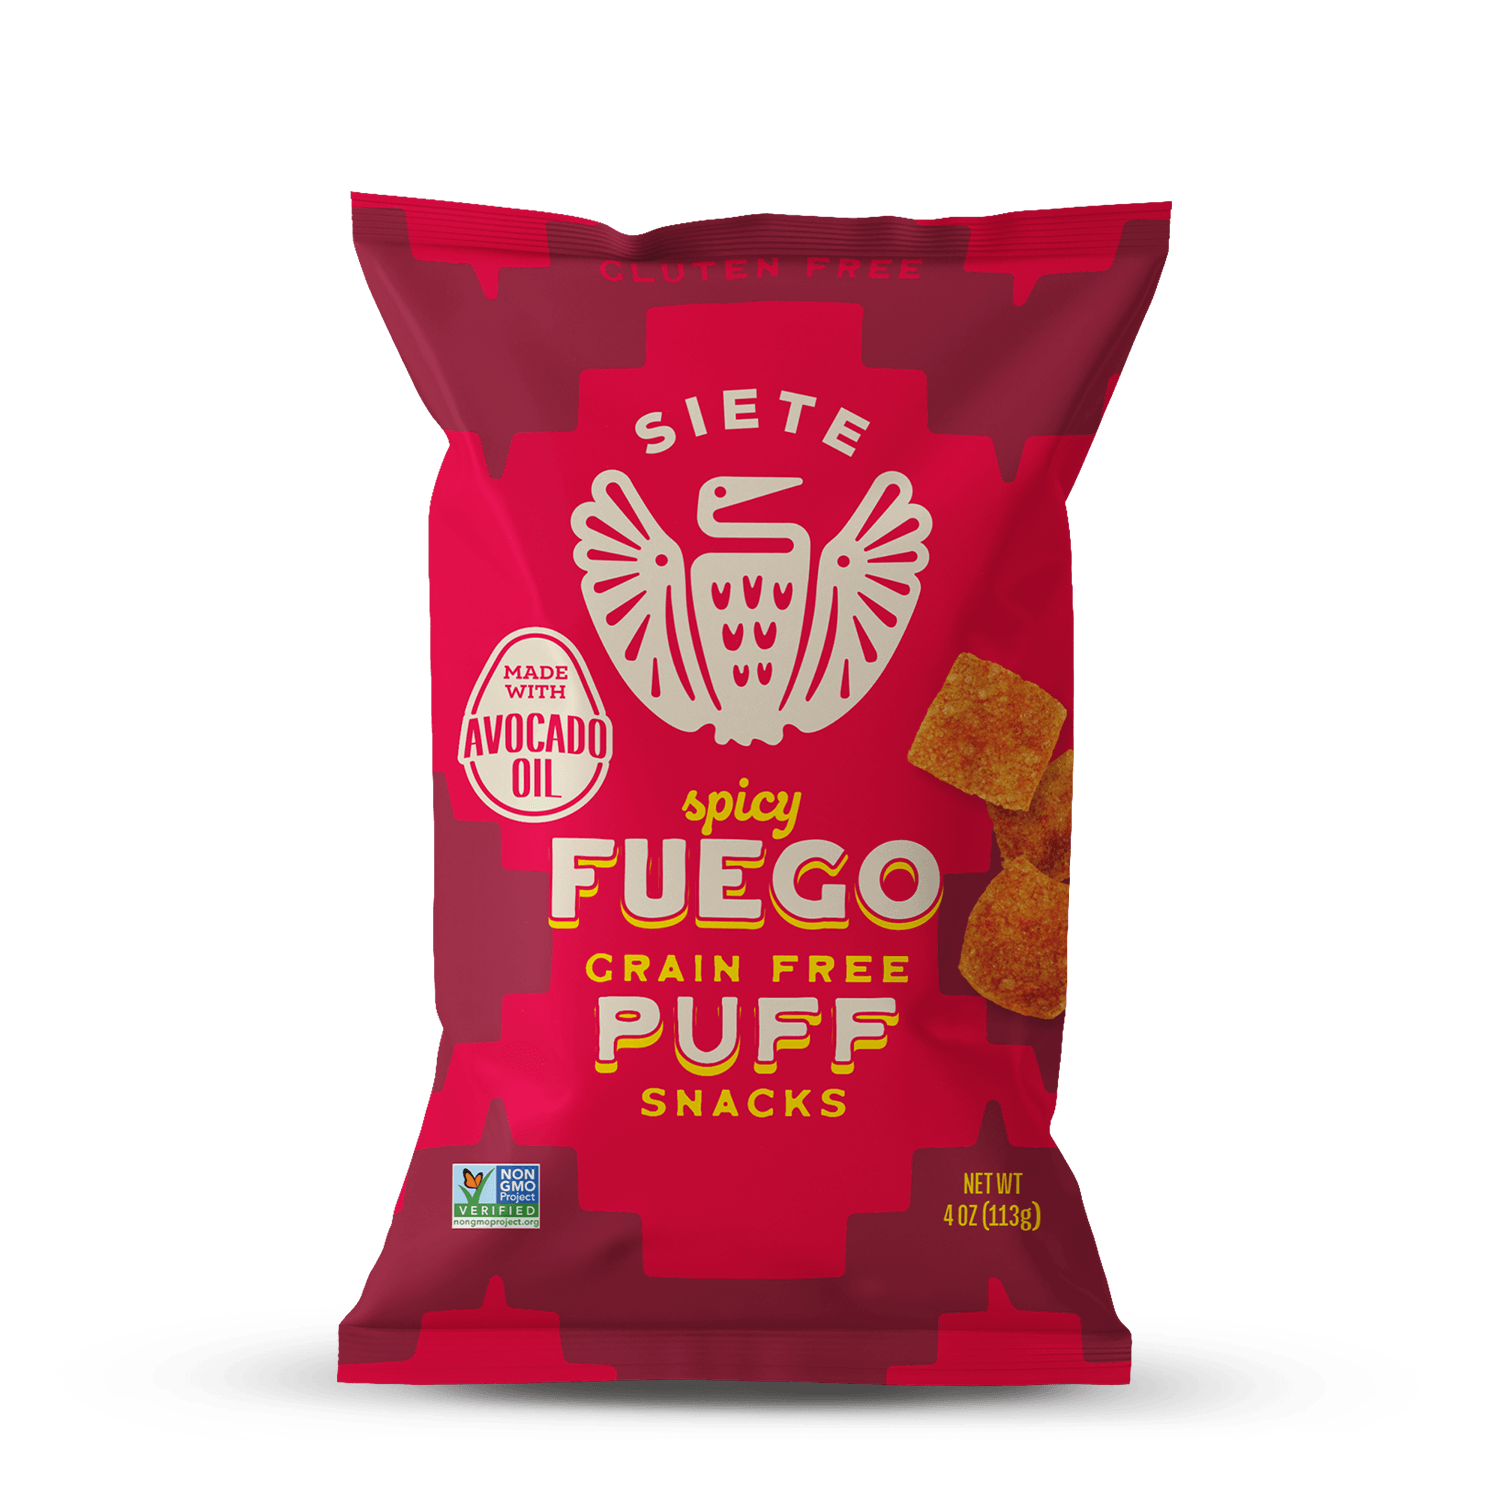 Fuego Grain Free Puff Snacks - 6 Bags